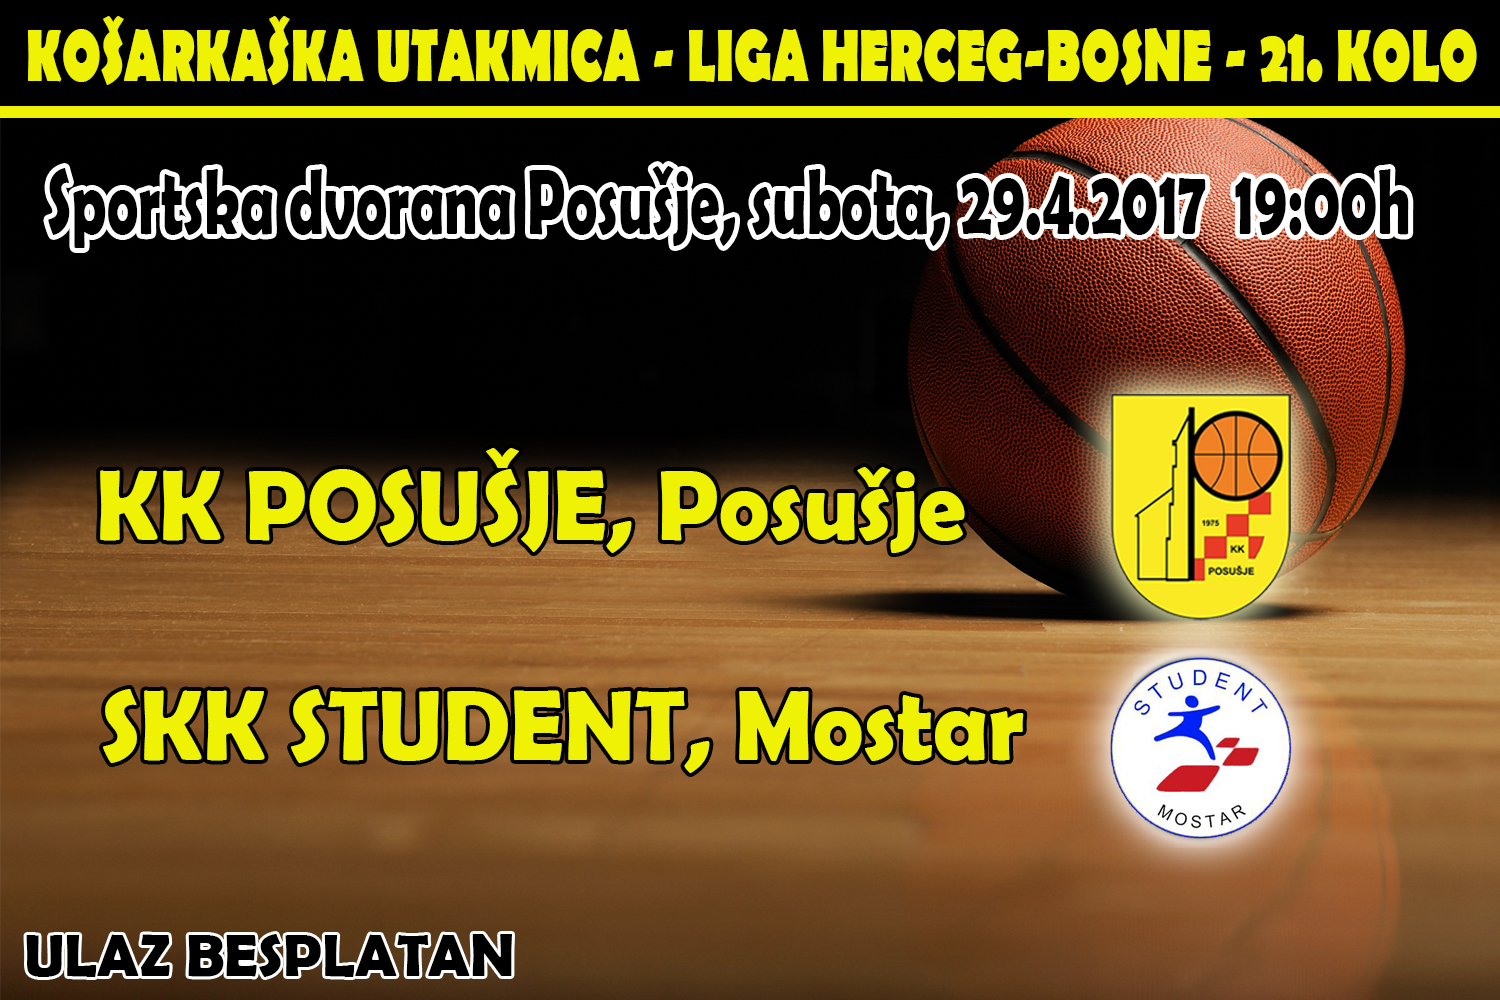 KK Posušja i SKK Student: Derbi utakmica dvije prvoplasirane momčadi prvenstva